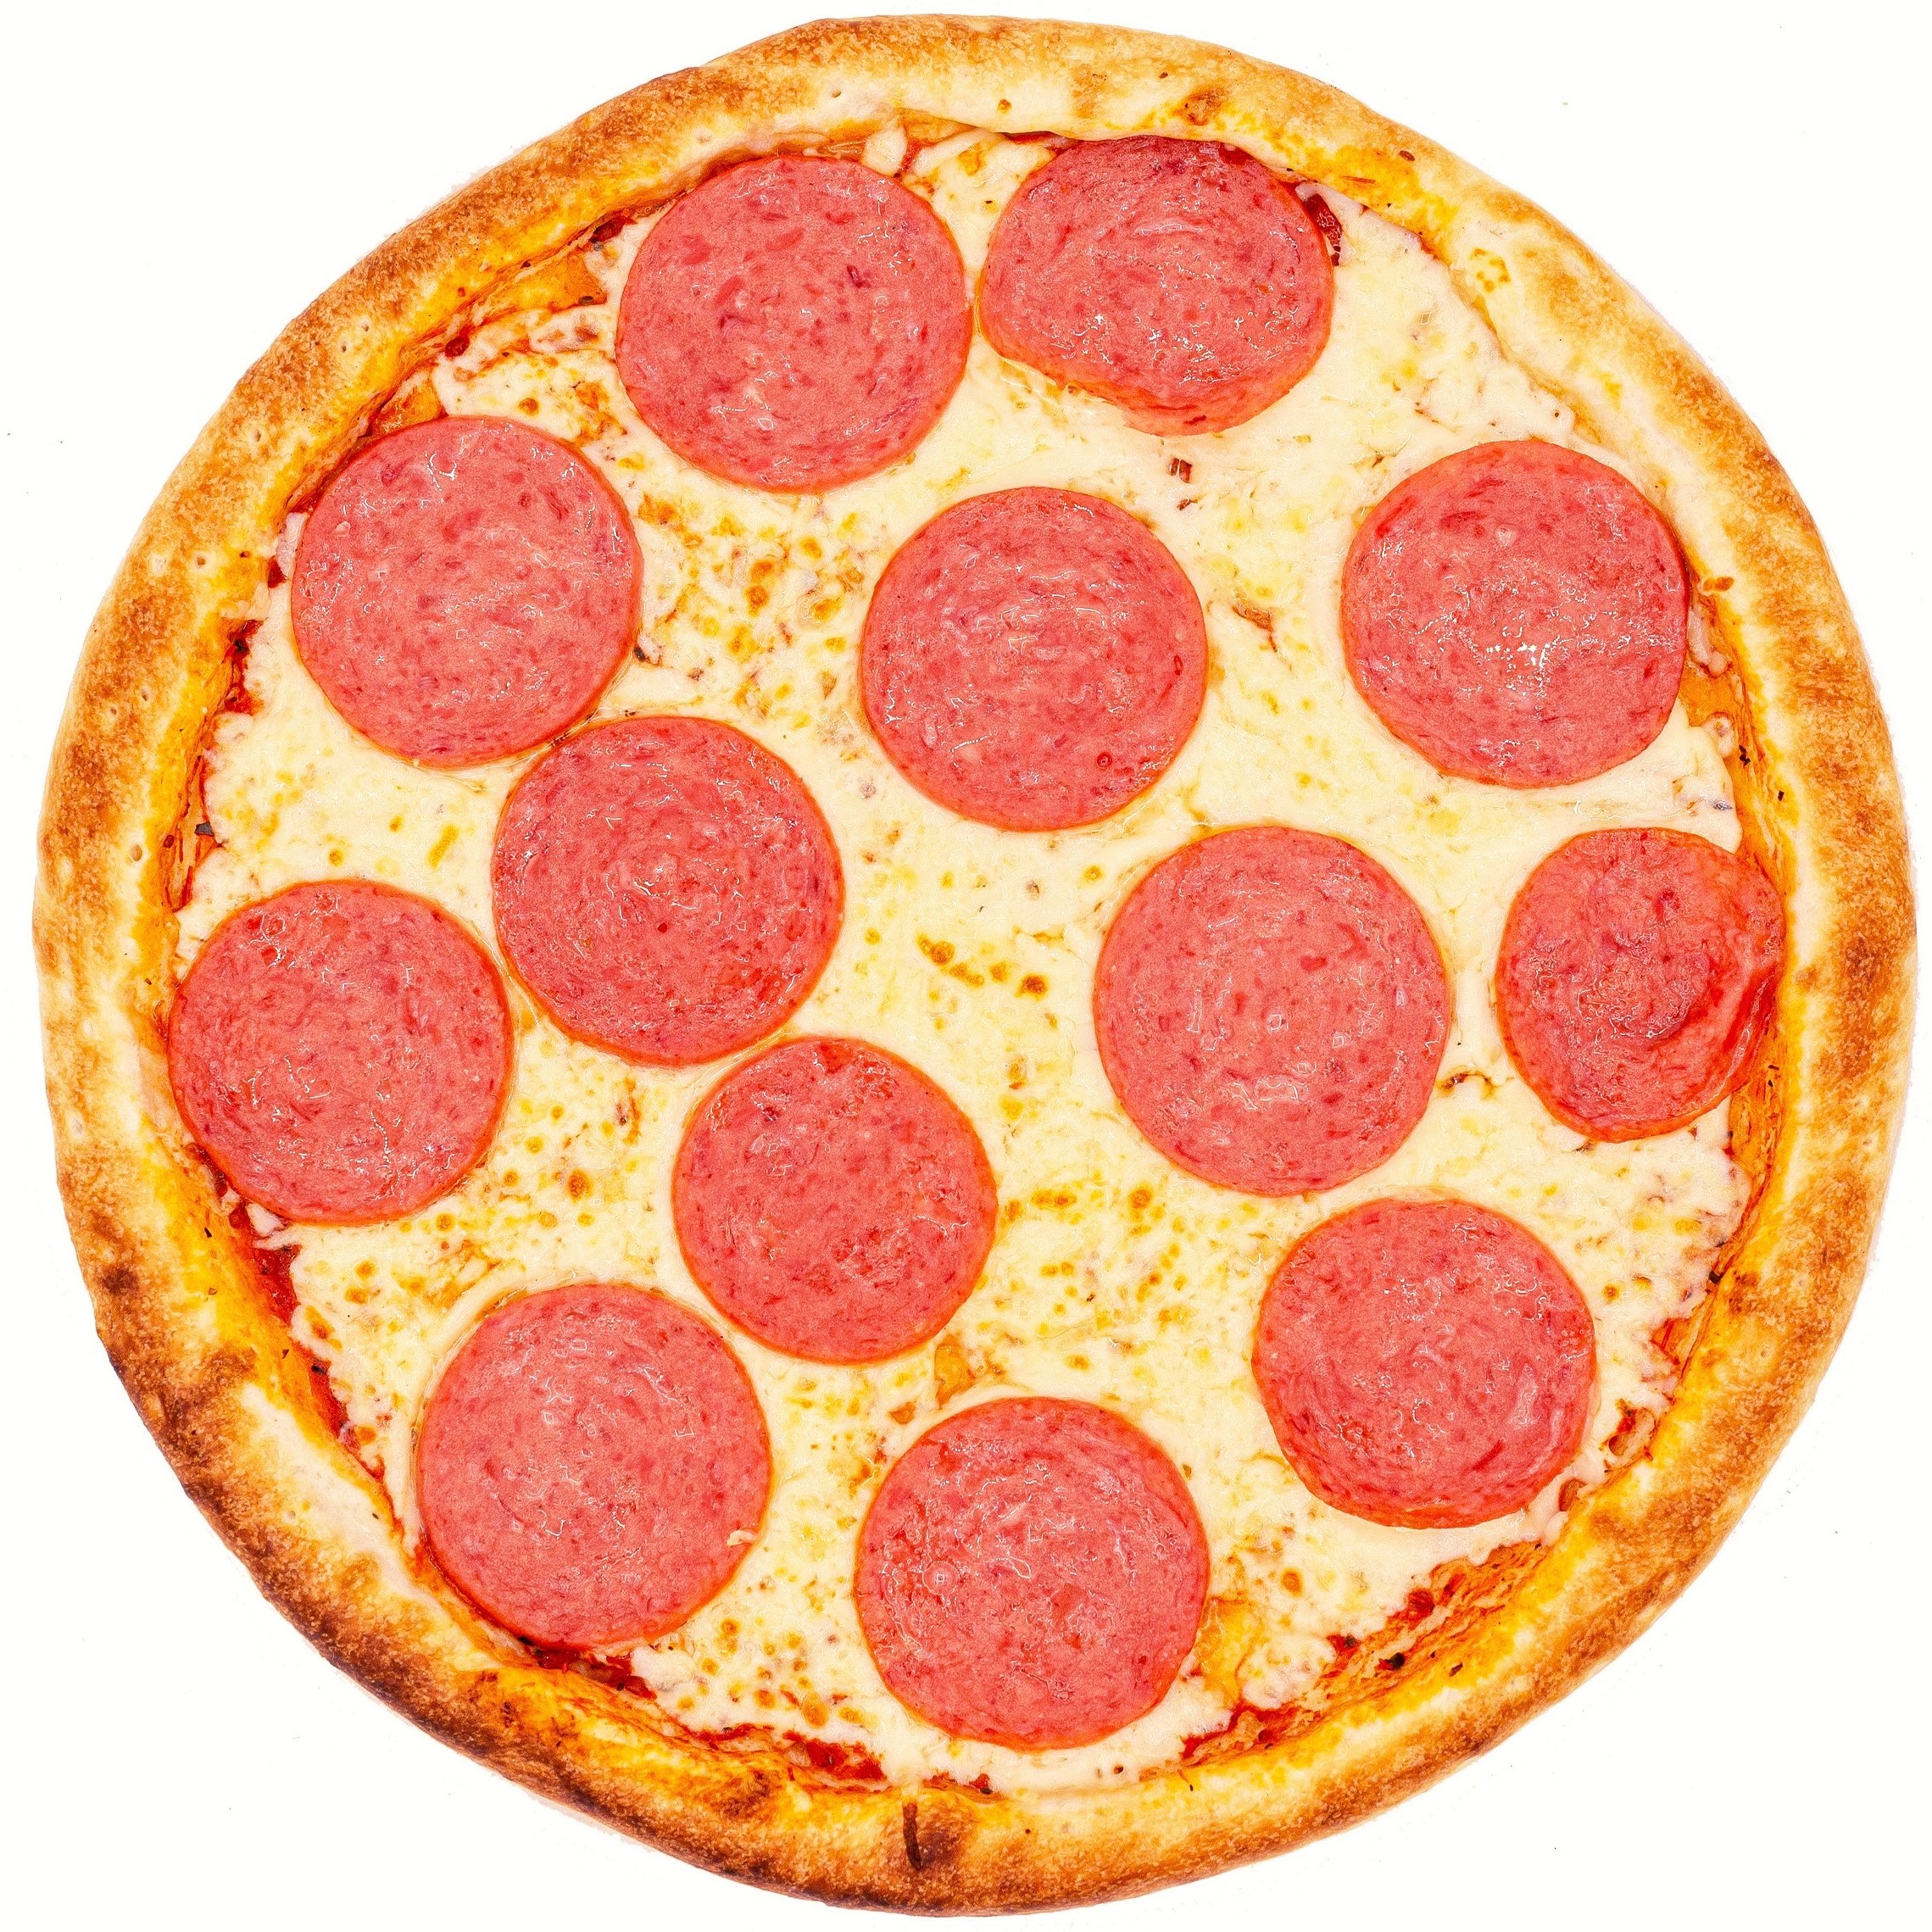 что означает пепперони в пицце фото 98